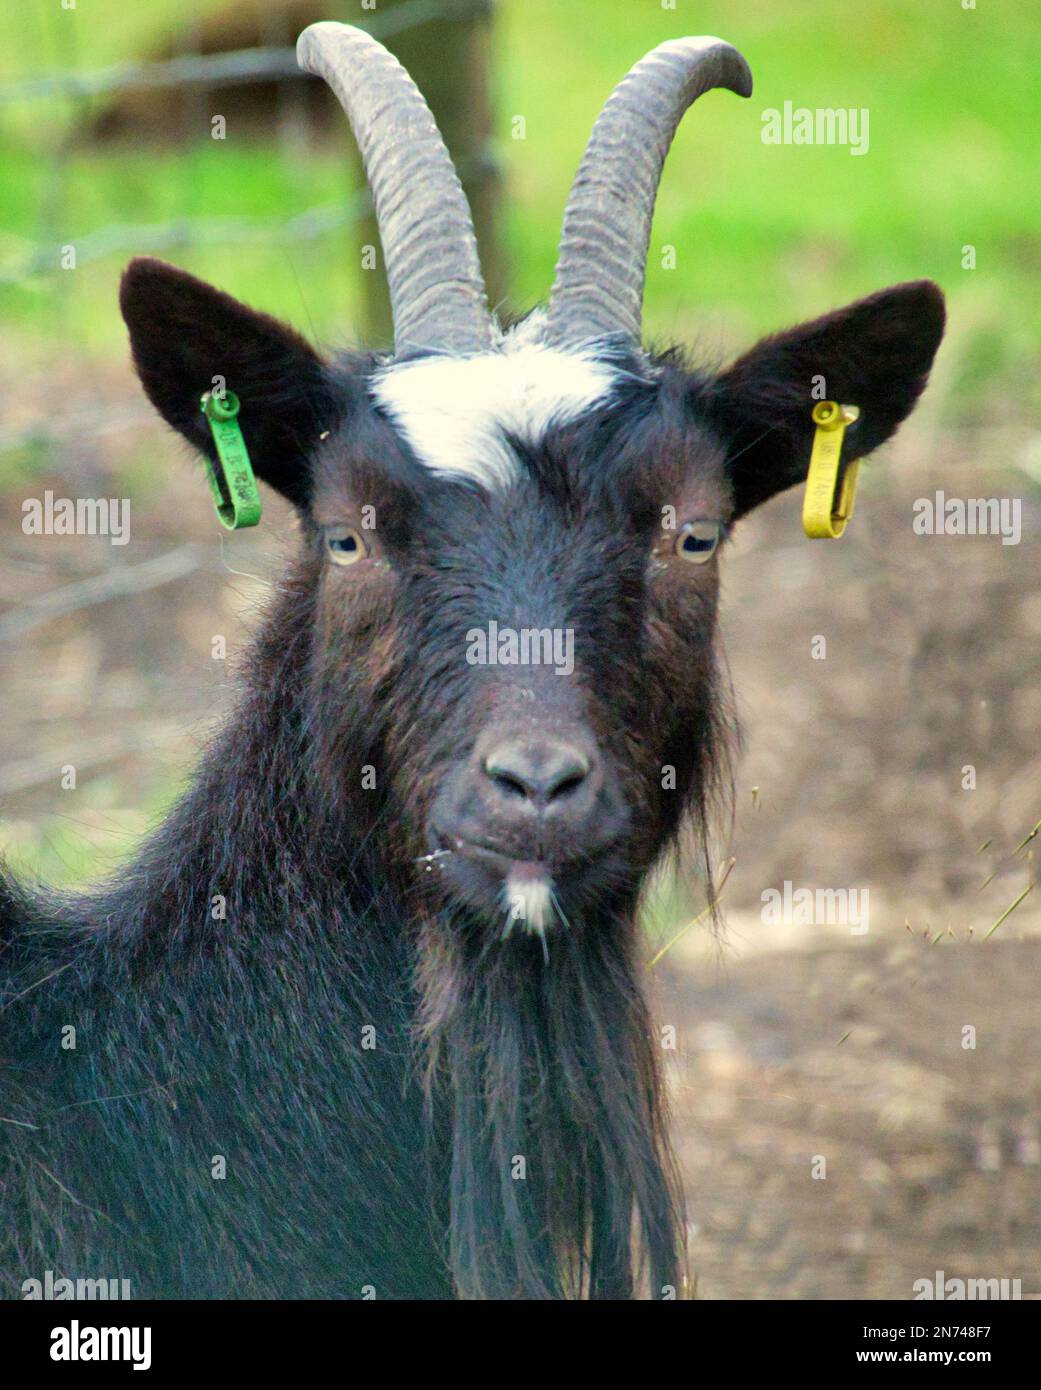 Bagot goat evil looking with tags that look like earrings in edinburgh zoo Stock Photo